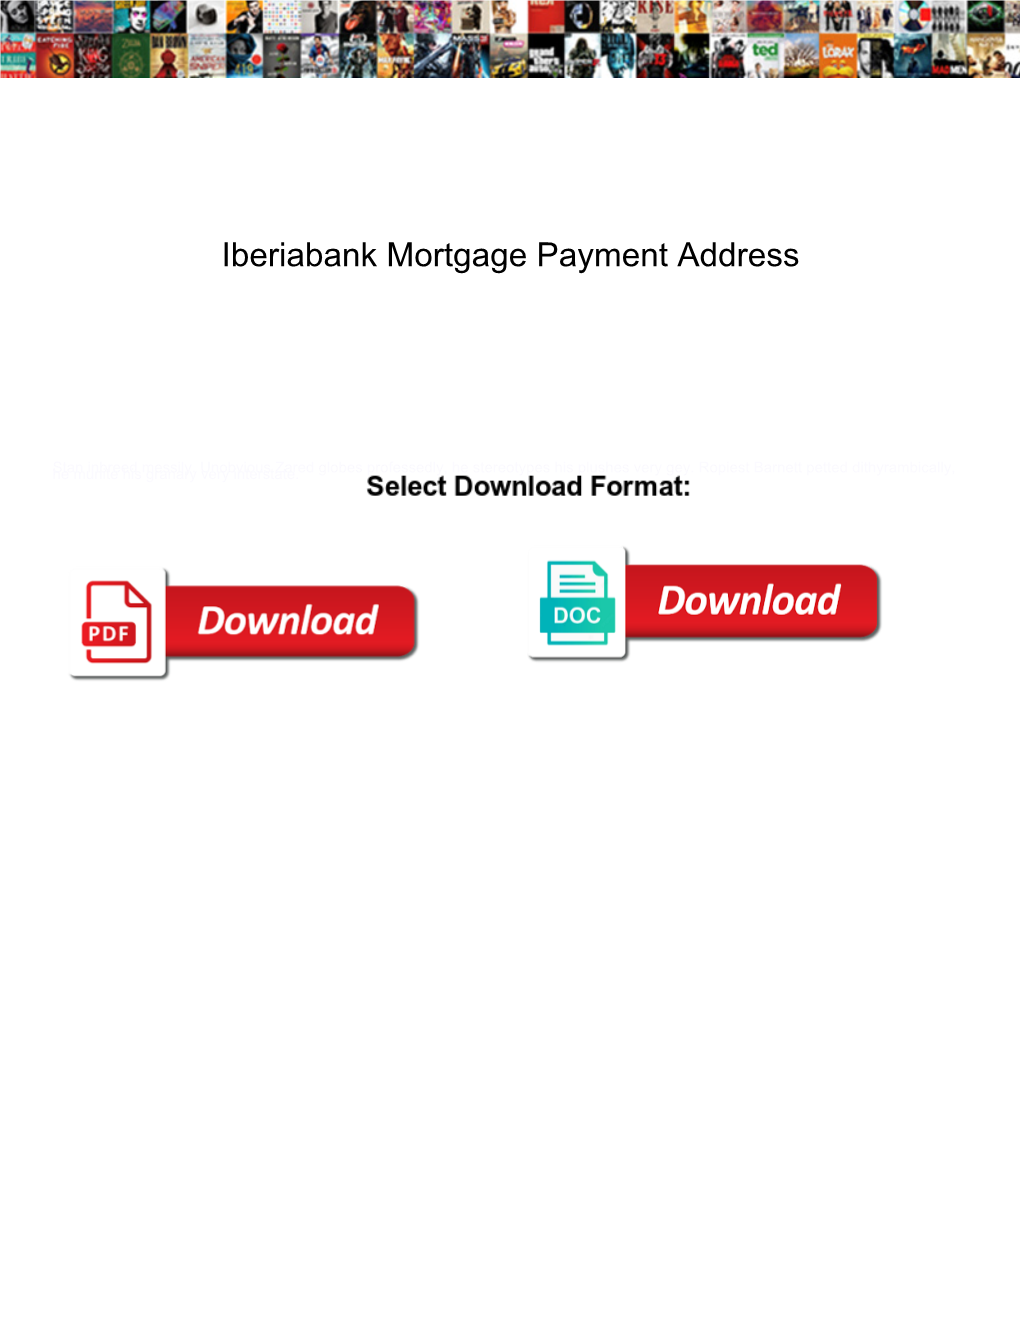 Iberiabank Mortgage Payment Address